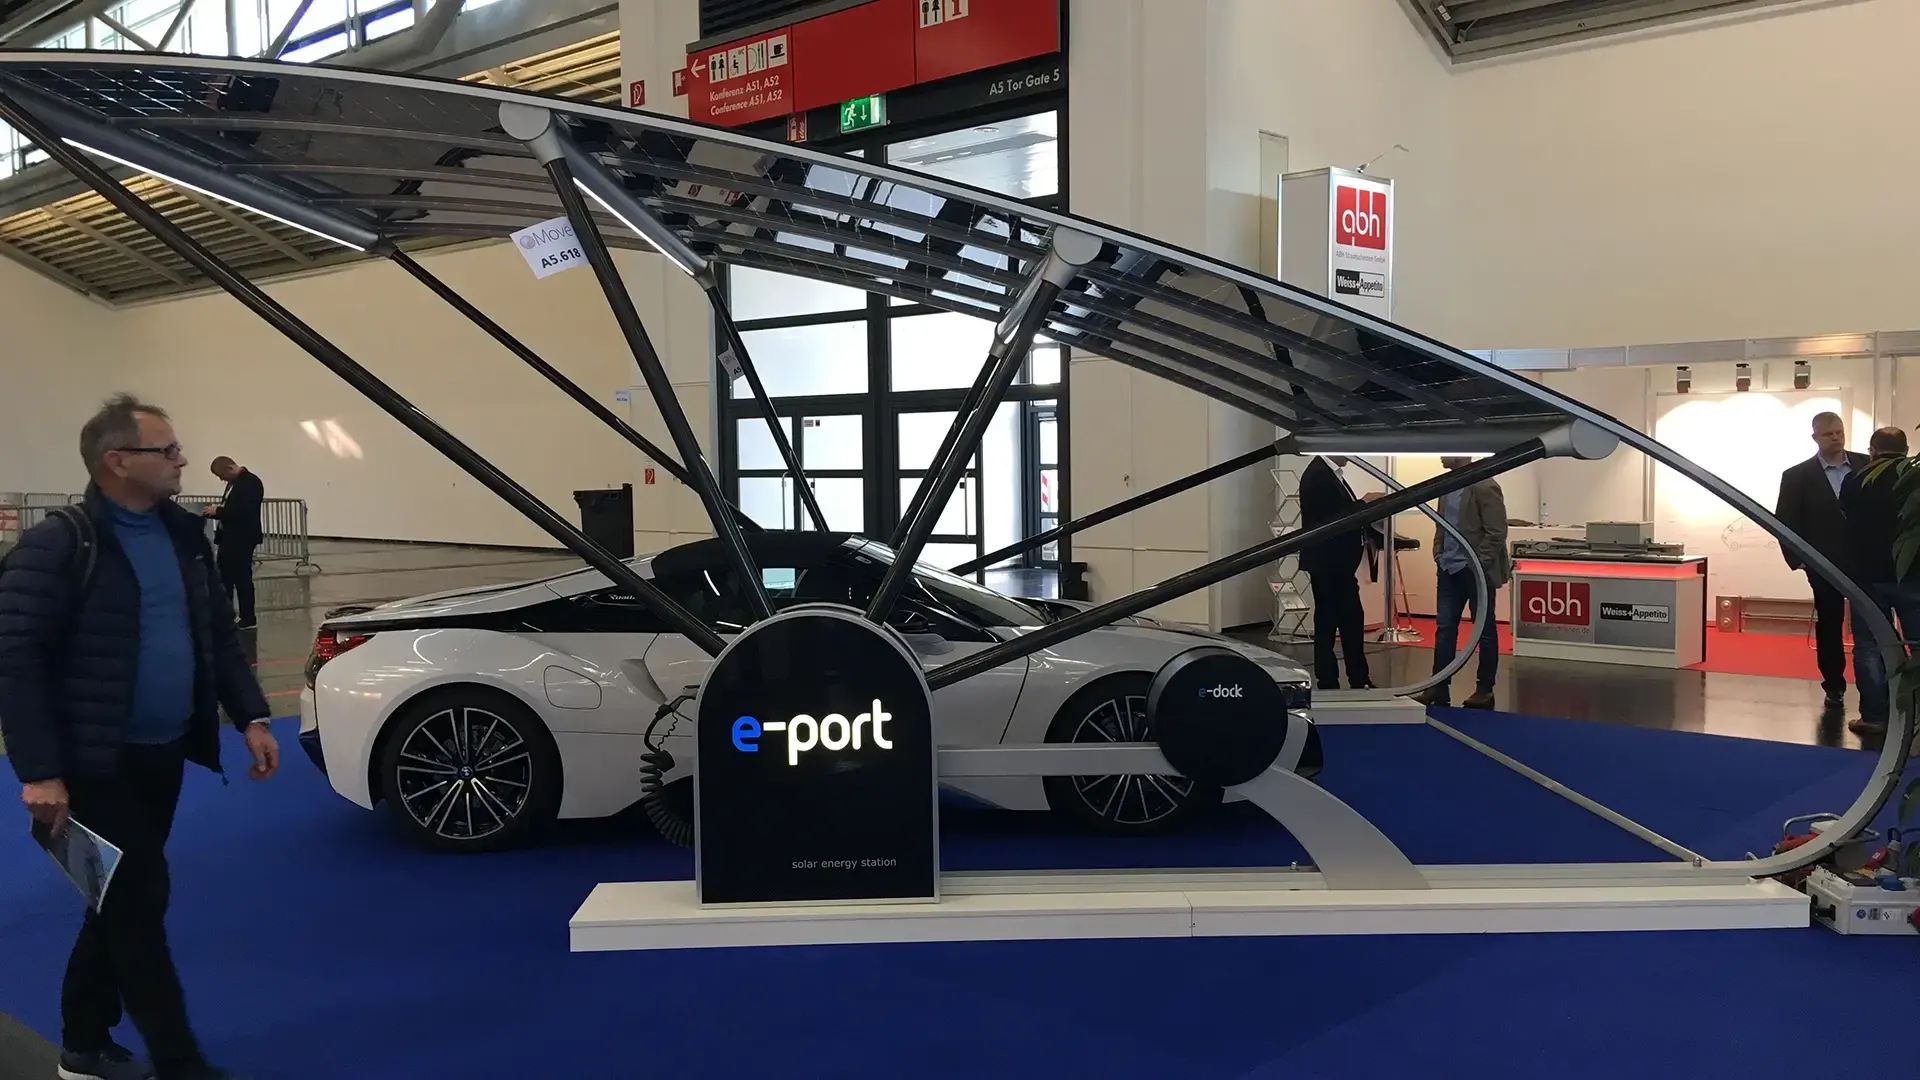 eport-solar-powered-ev-charging-canopy